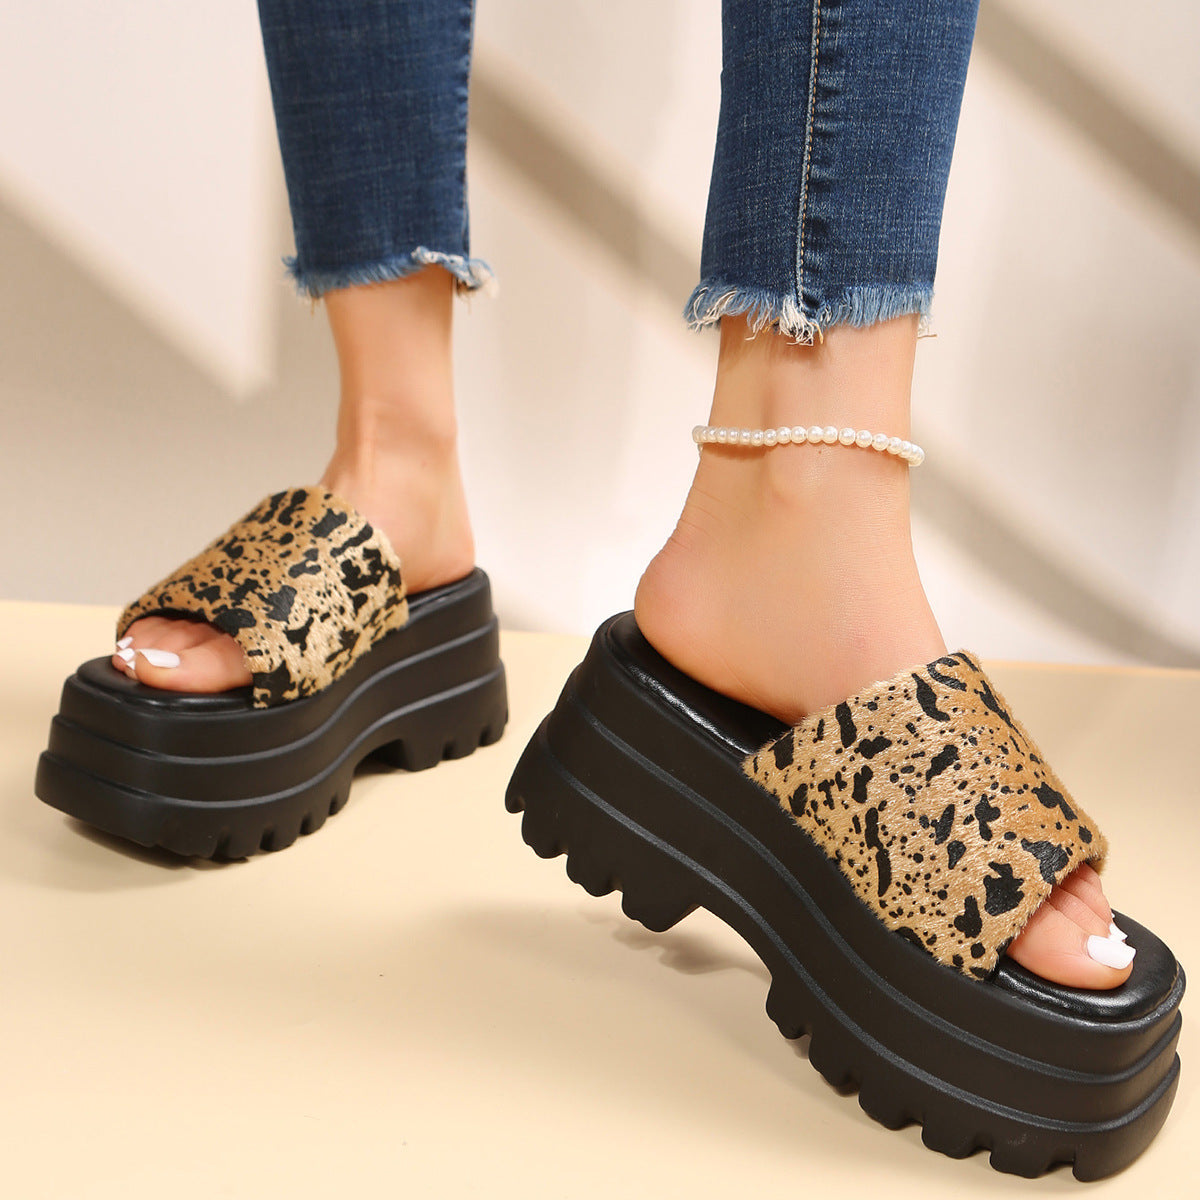 Peep Toe Slipper High Heel Flat Shoes Summer Cow Print Sandals